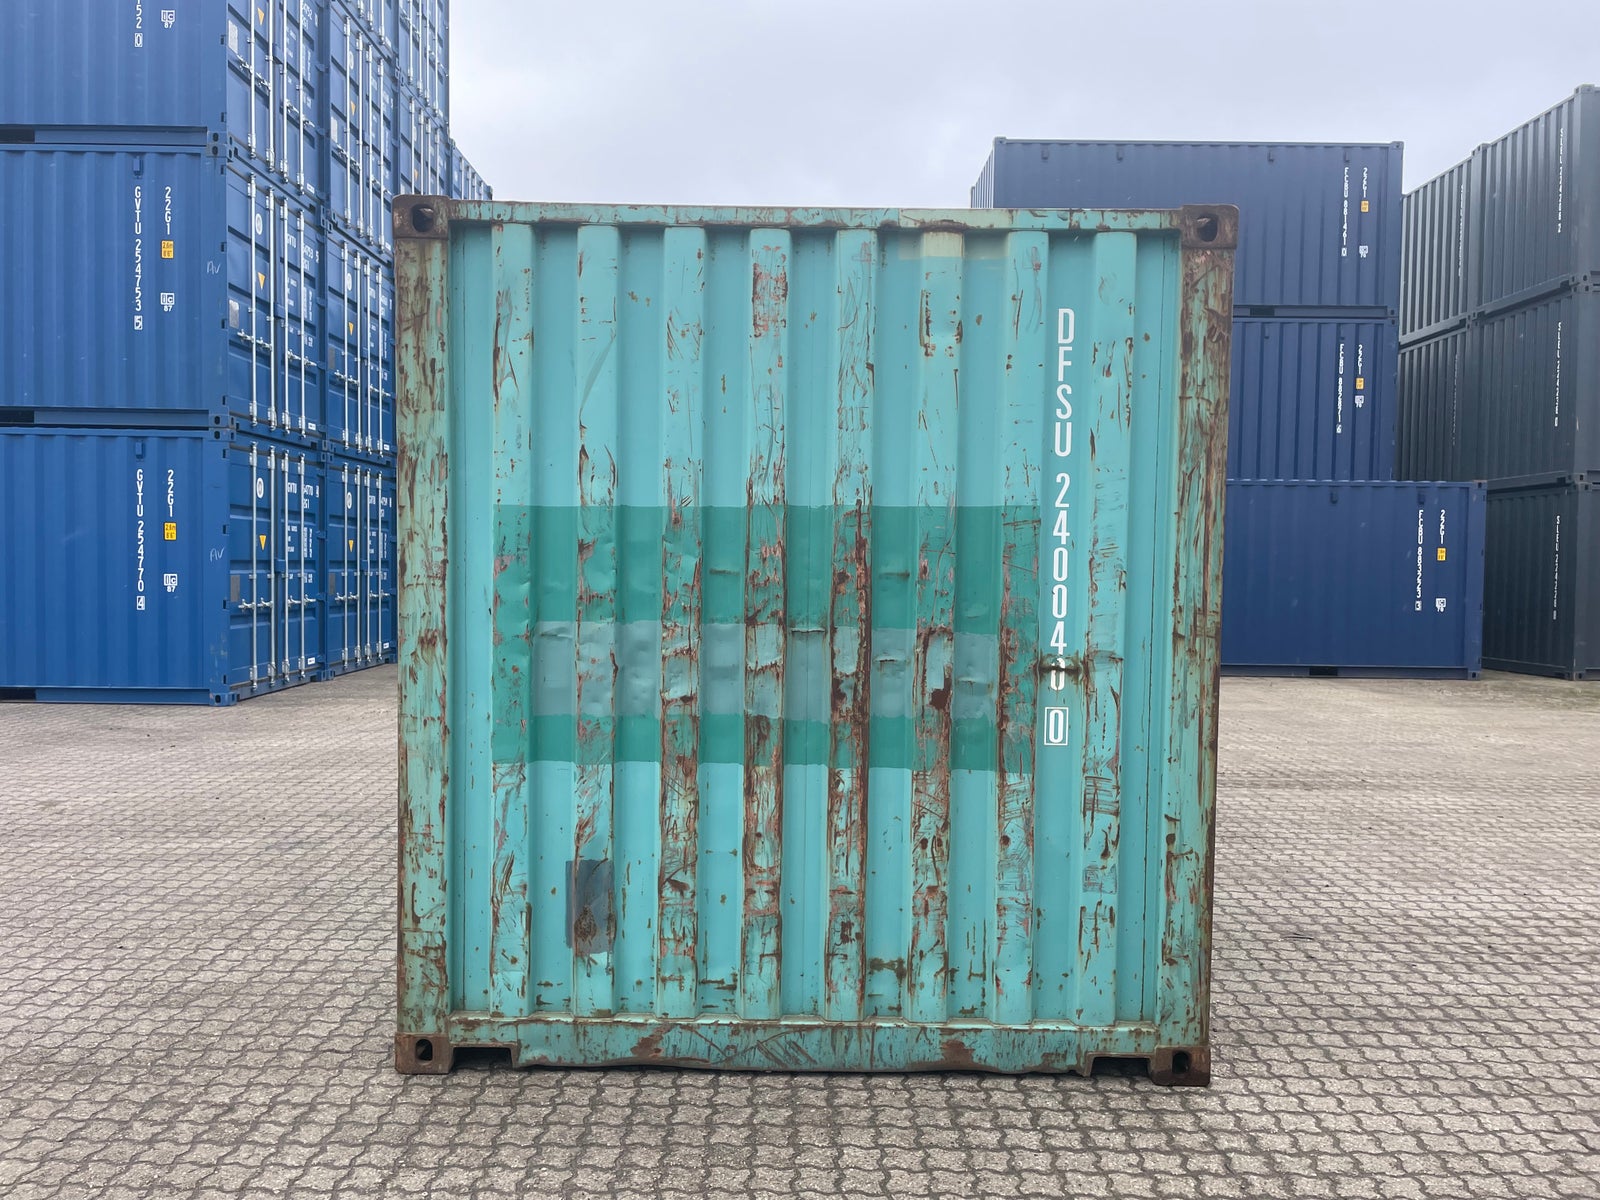 20 fods Container- ID: DFSU 240040-0